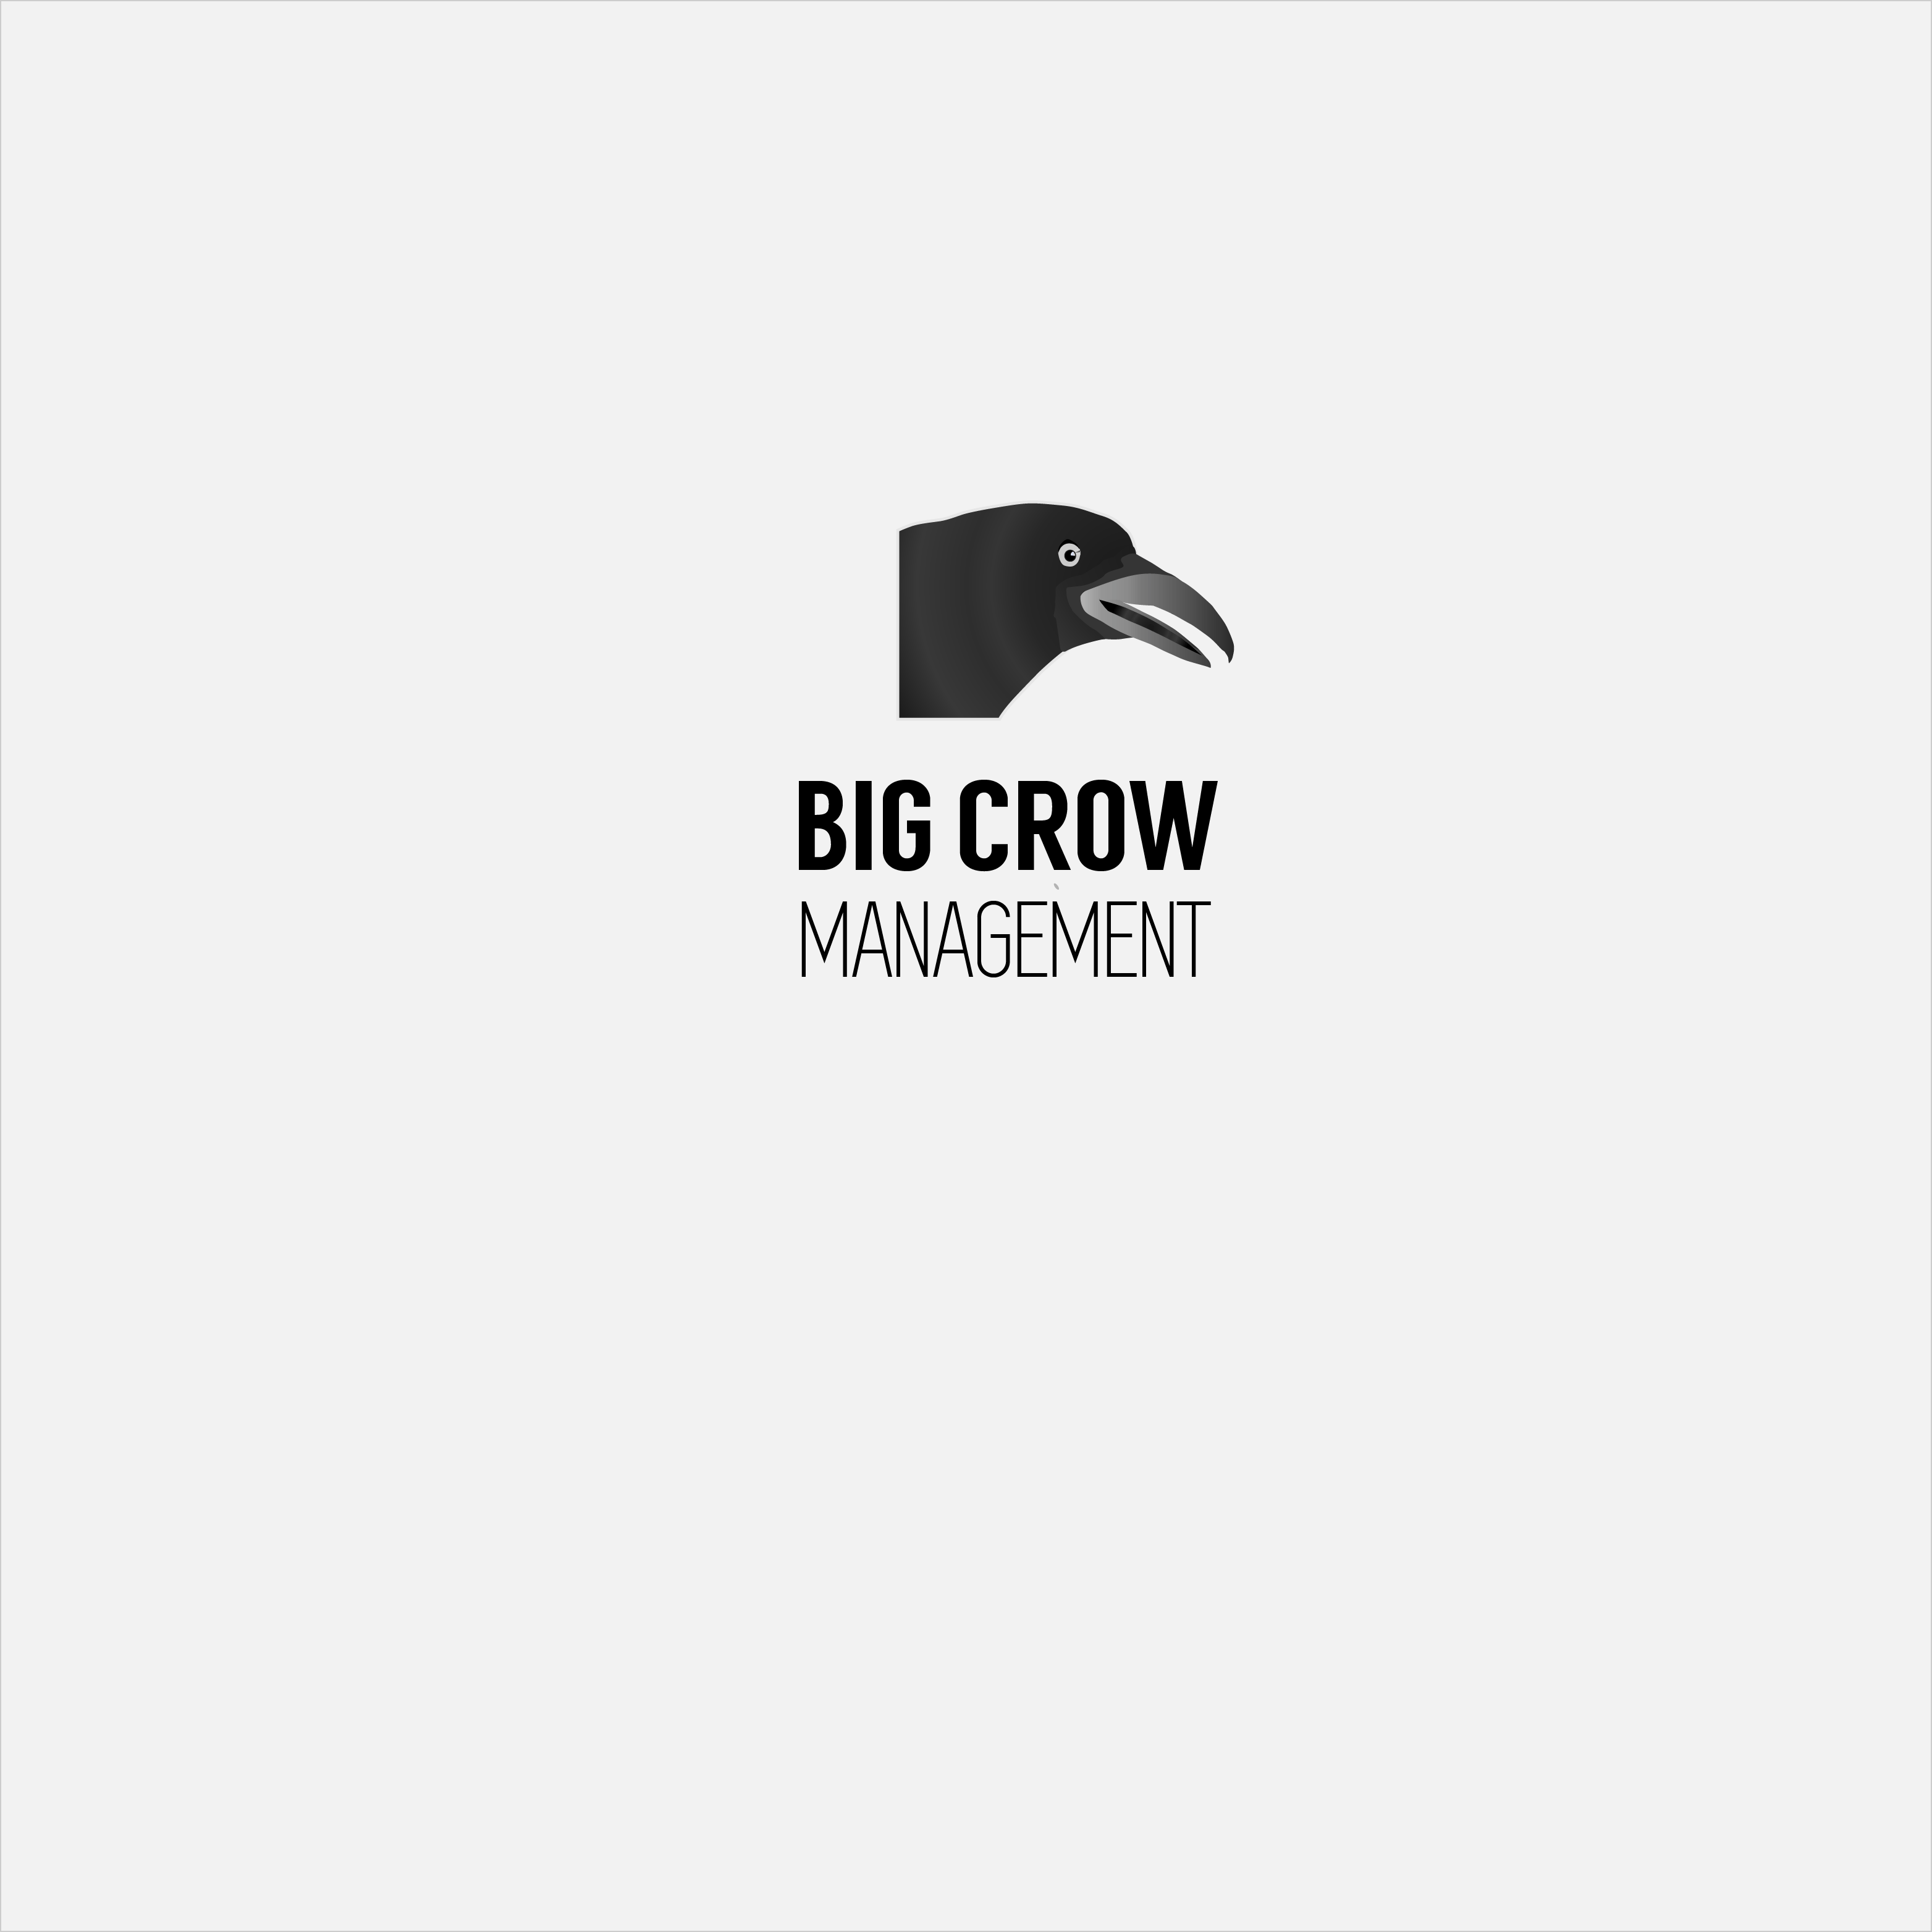 American Crow Logo - Logo Design #149 | 'Big Crow Management' design project ...